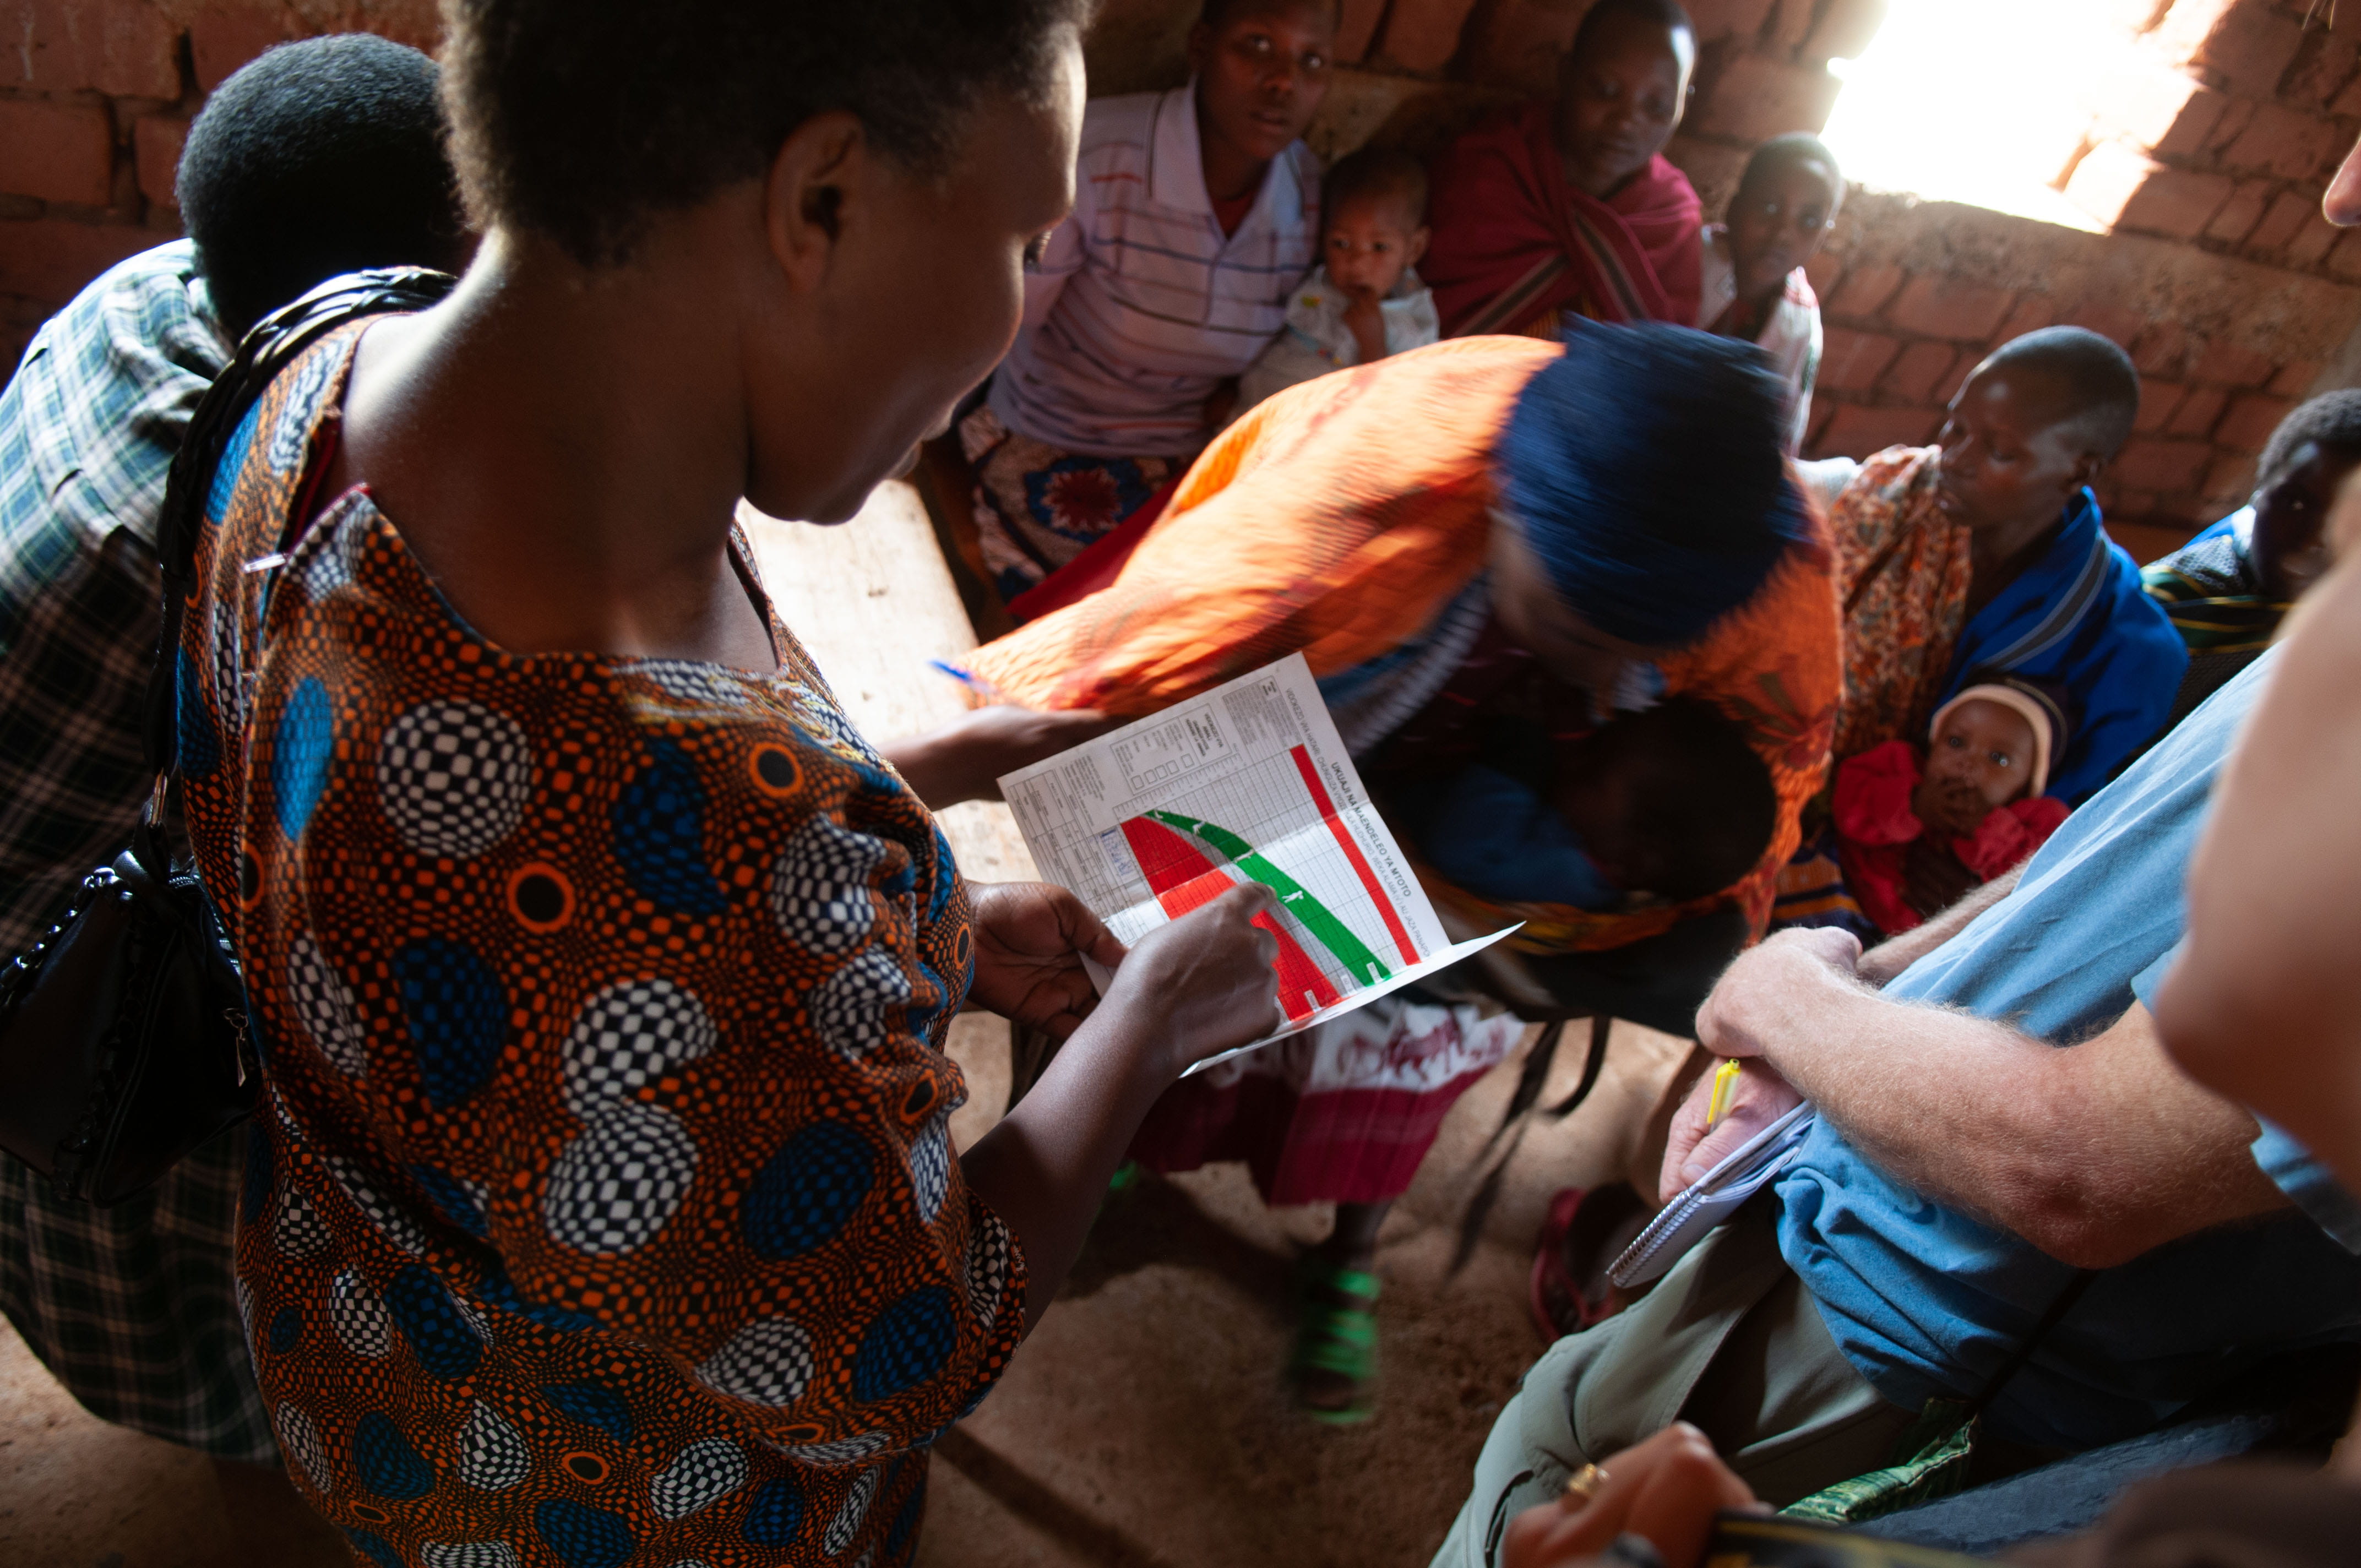 Tanzanian researchers provide community health outreach.